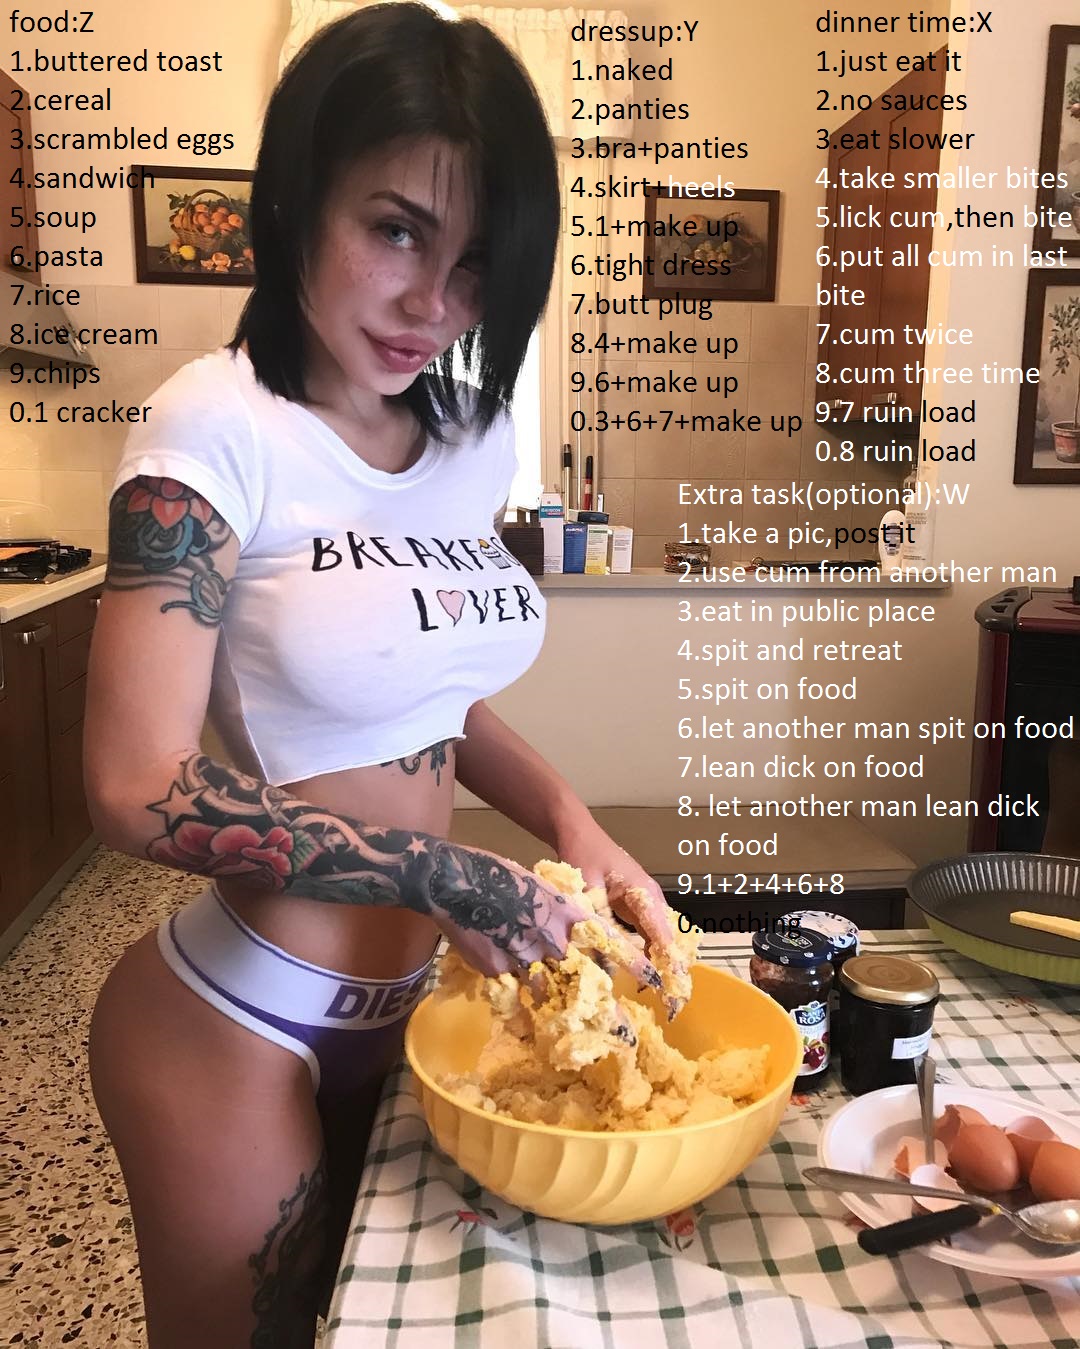 anna ceccarelli recommends cum on food pic